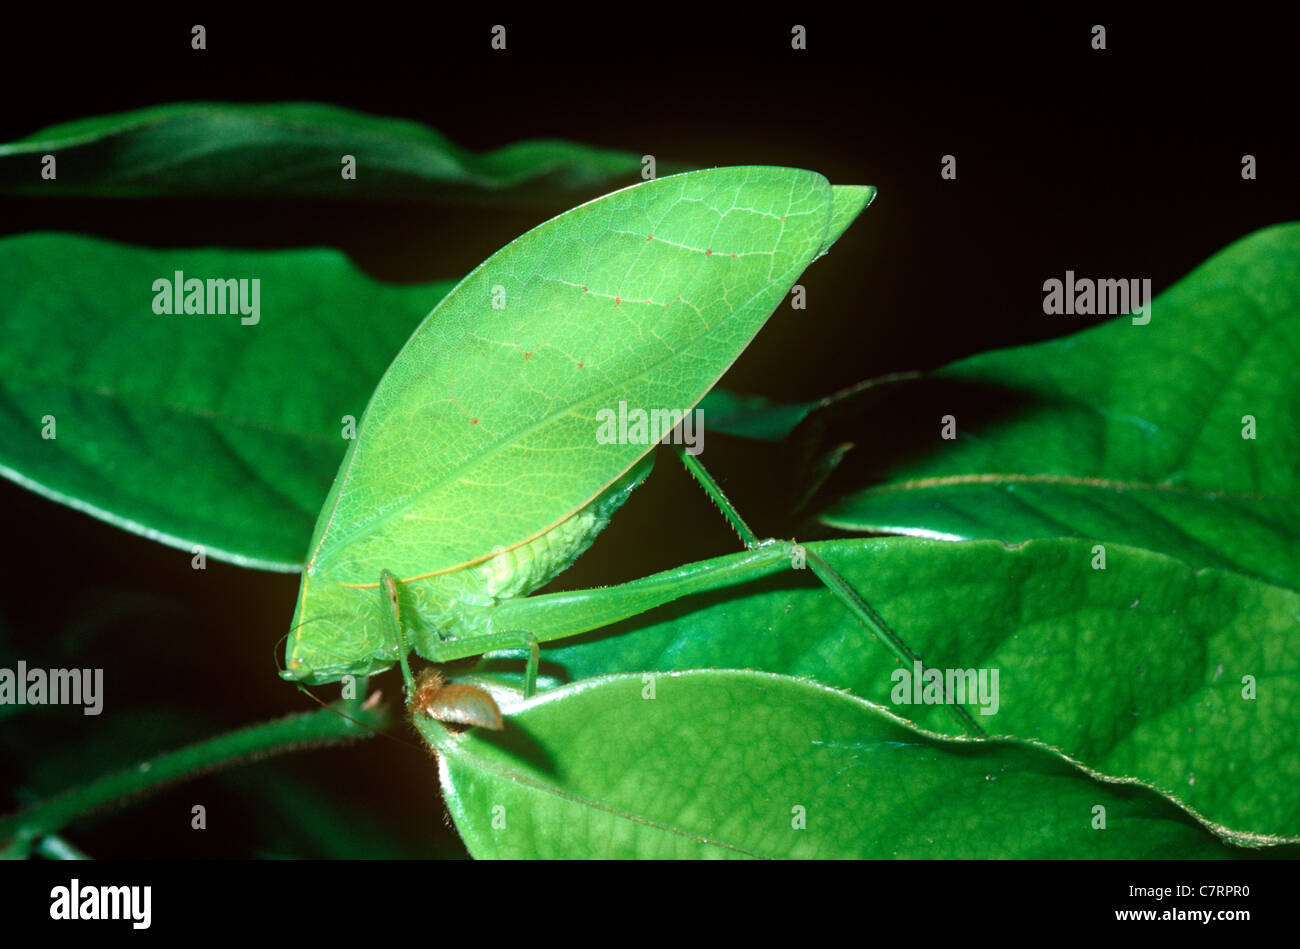 Bush-cricket / katydid (Phylloptera sp.: Tettigoniidae) resembling a leaf in rainforest, Brazil Stock Photo